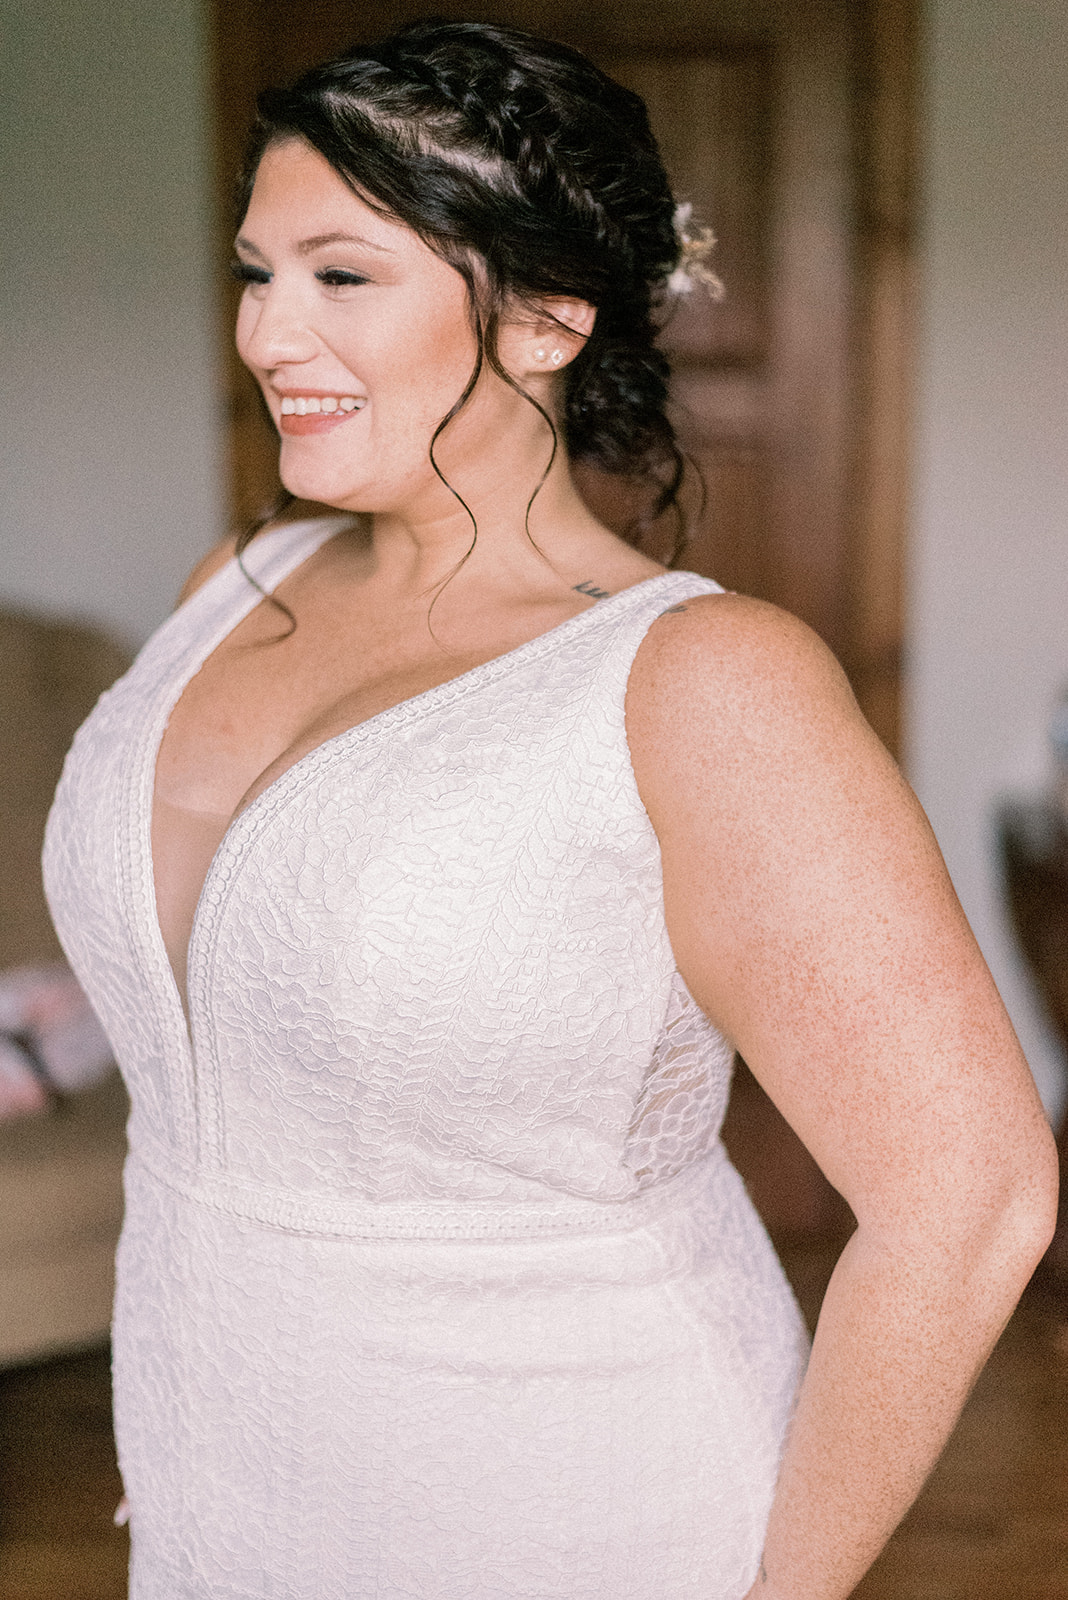 Pennsylvania wedding photographer captures bride smiling while wearing wedding dress